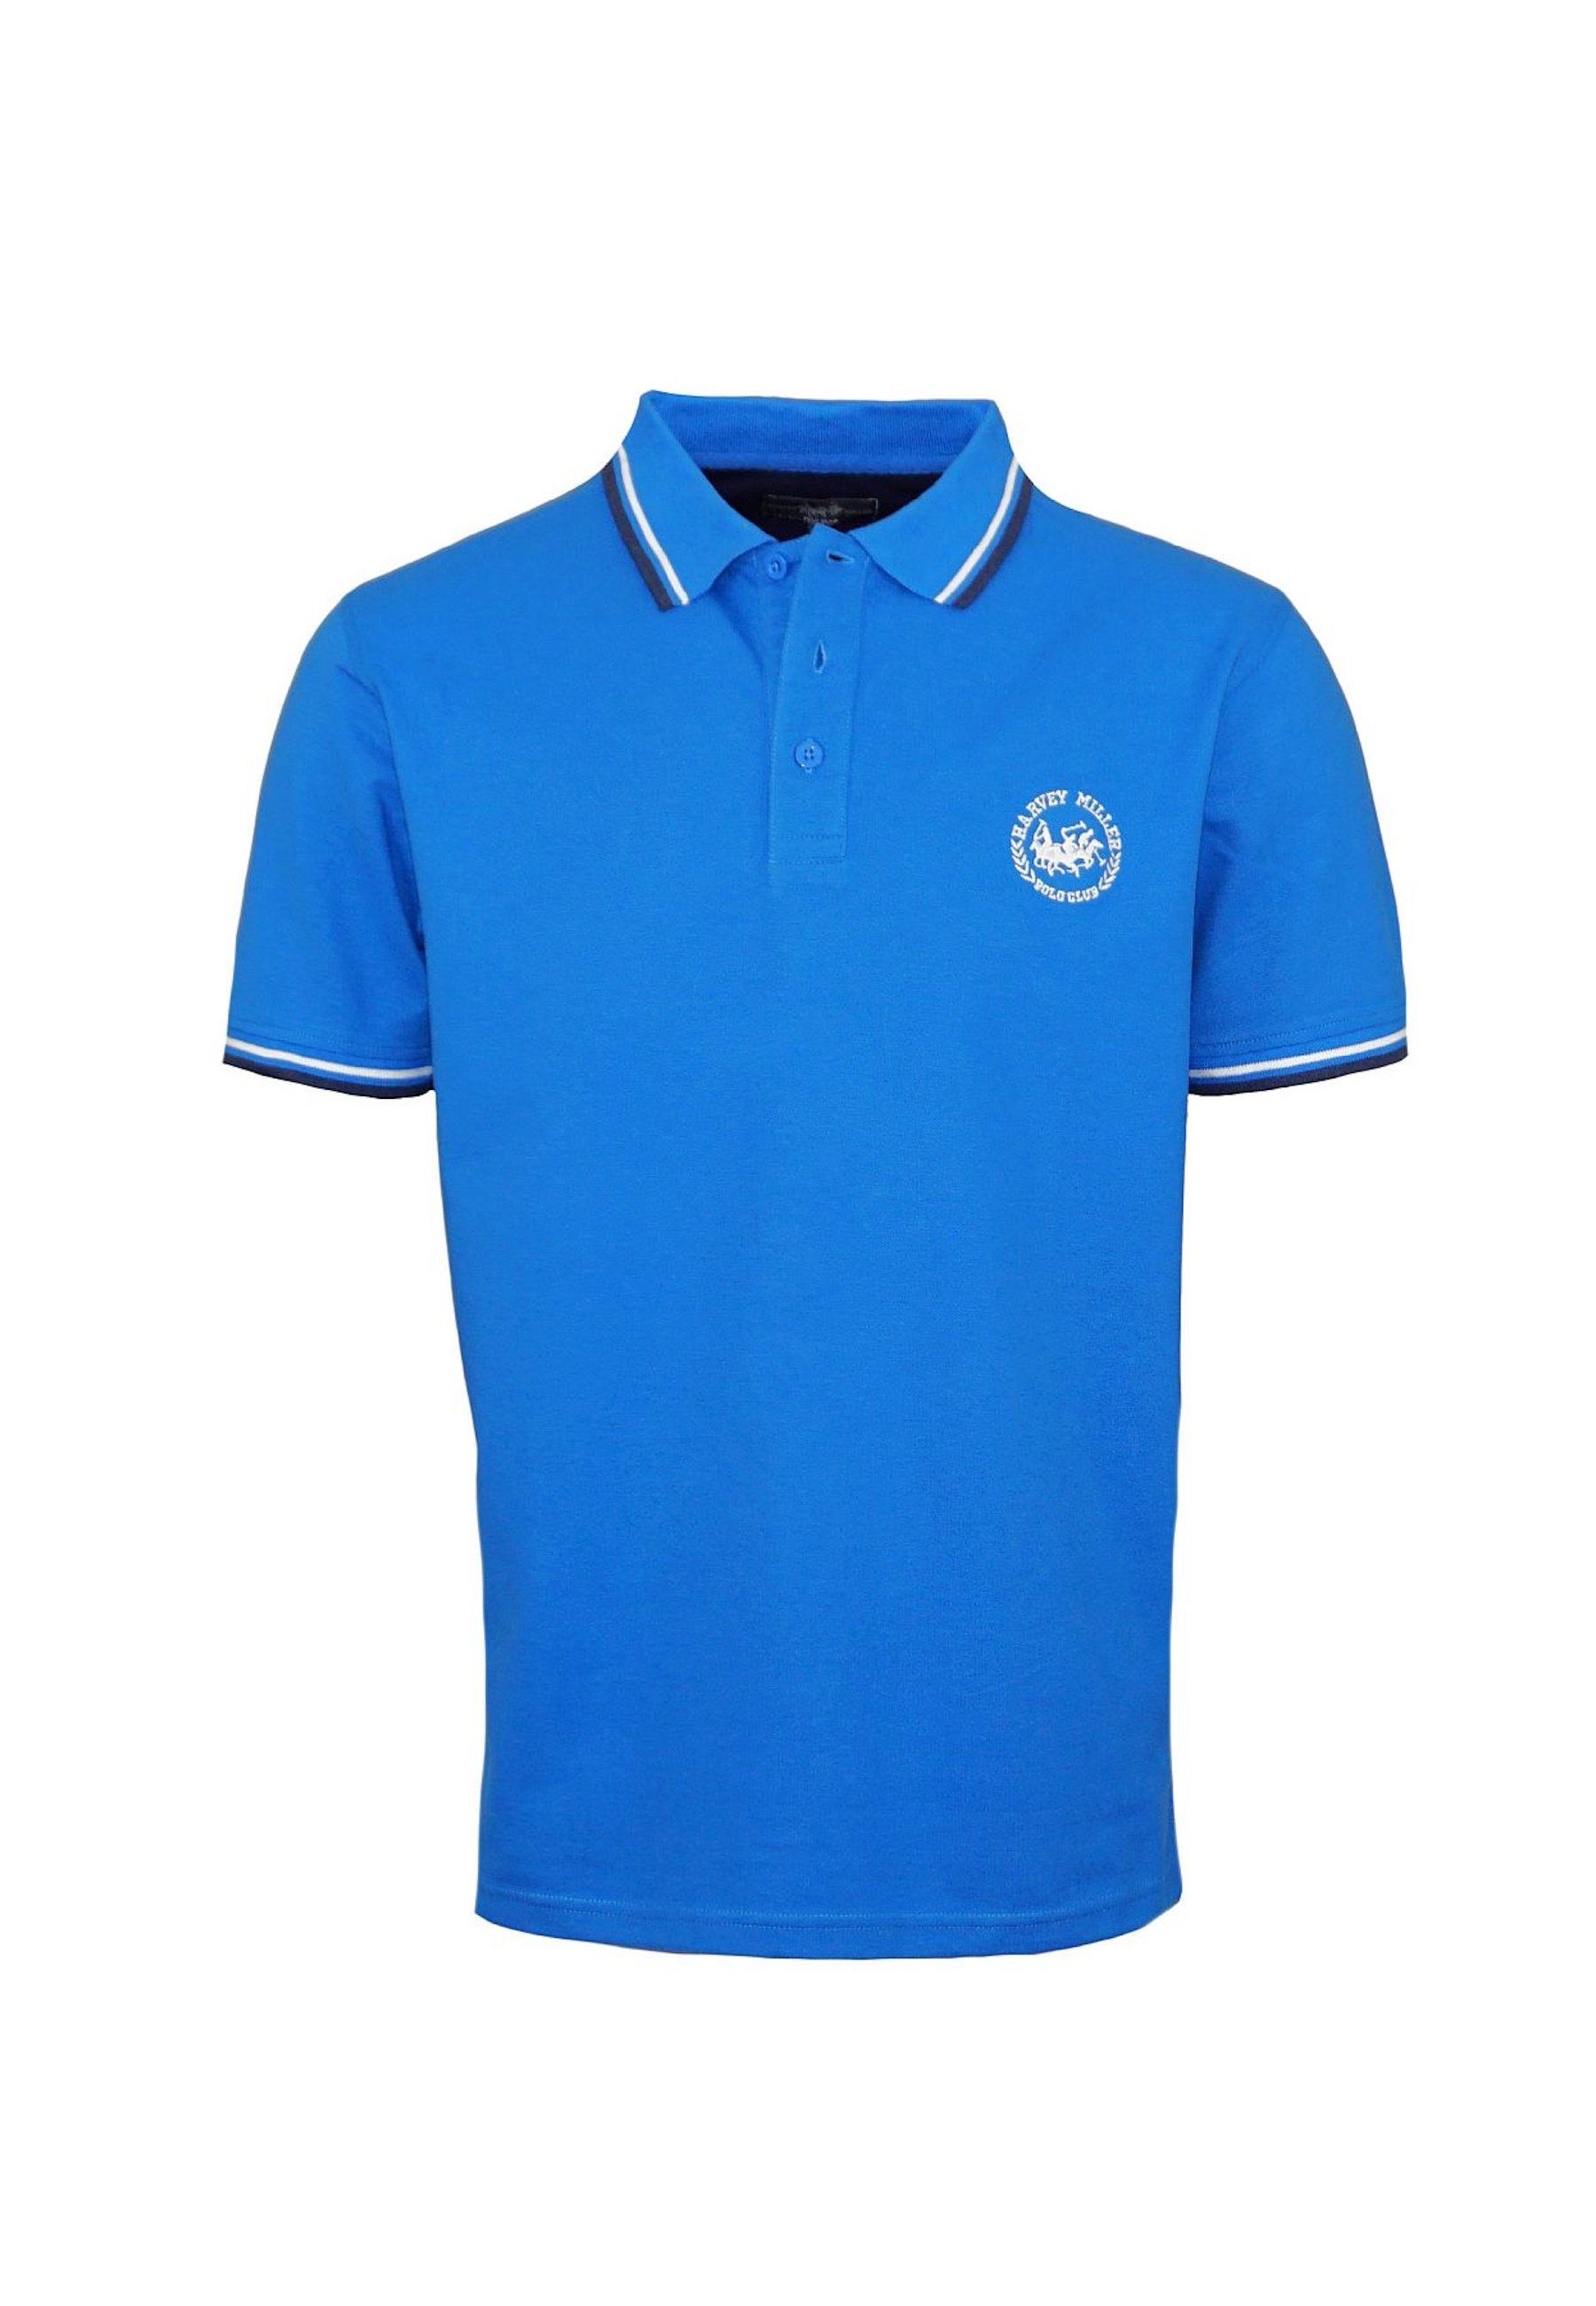 Harvey Miller Poloshirt Fashion Polo blau Shirt Kurzarm Polohemd Poloshirt